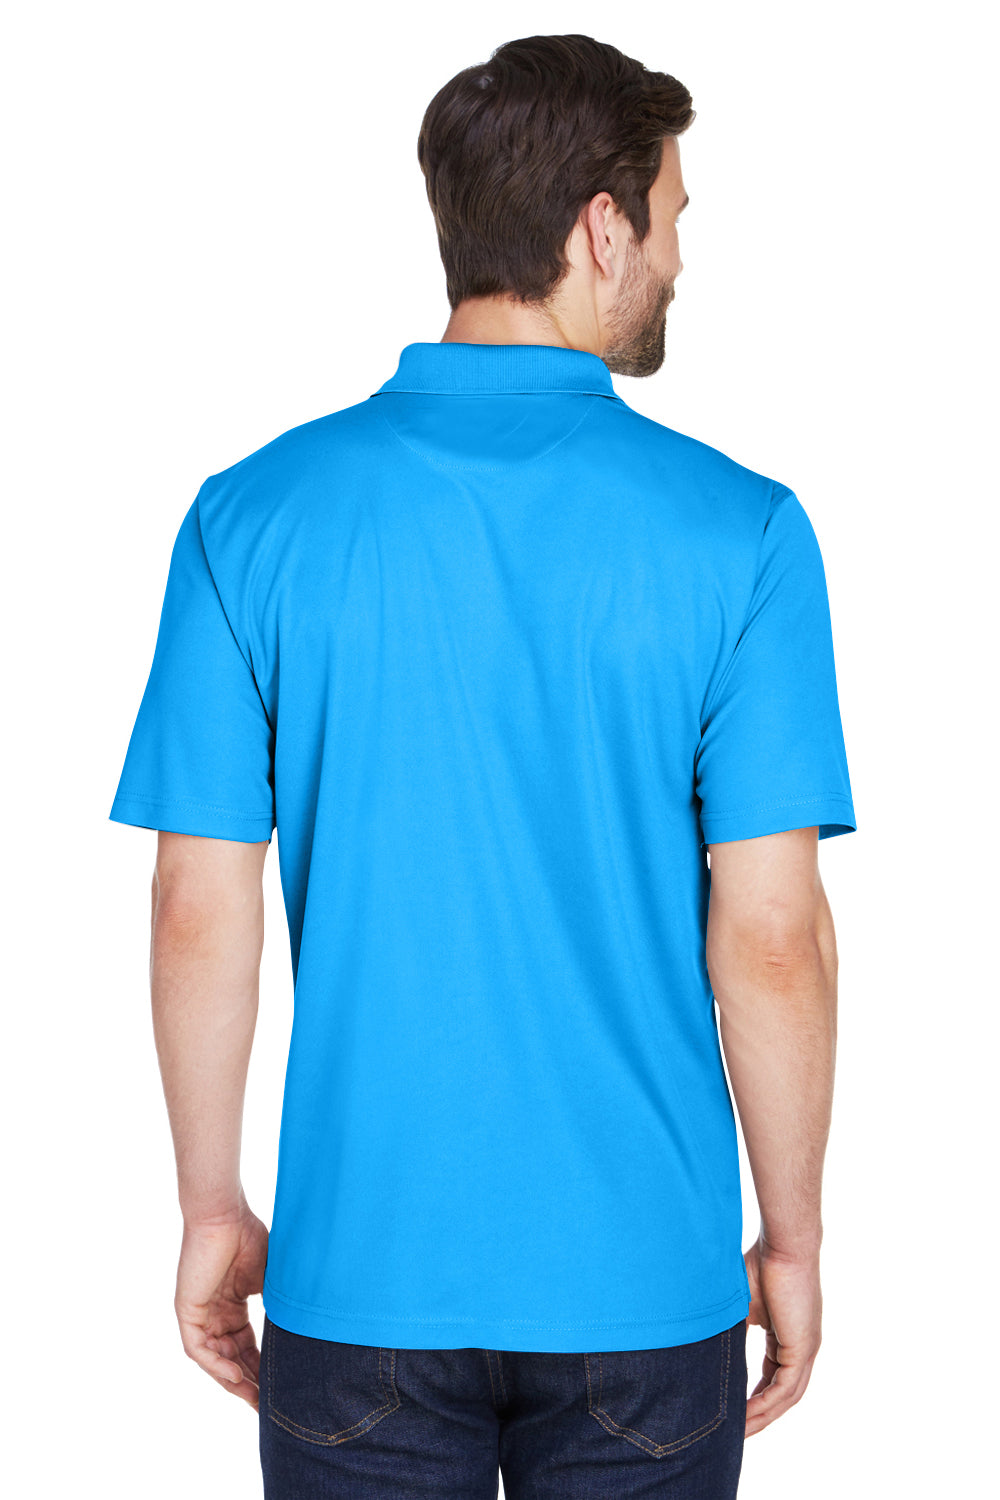 UltraClub 8210 Mens Cool & Dry Moisture Wicking Short Sleeve Polo Shirt Coast Blue Back